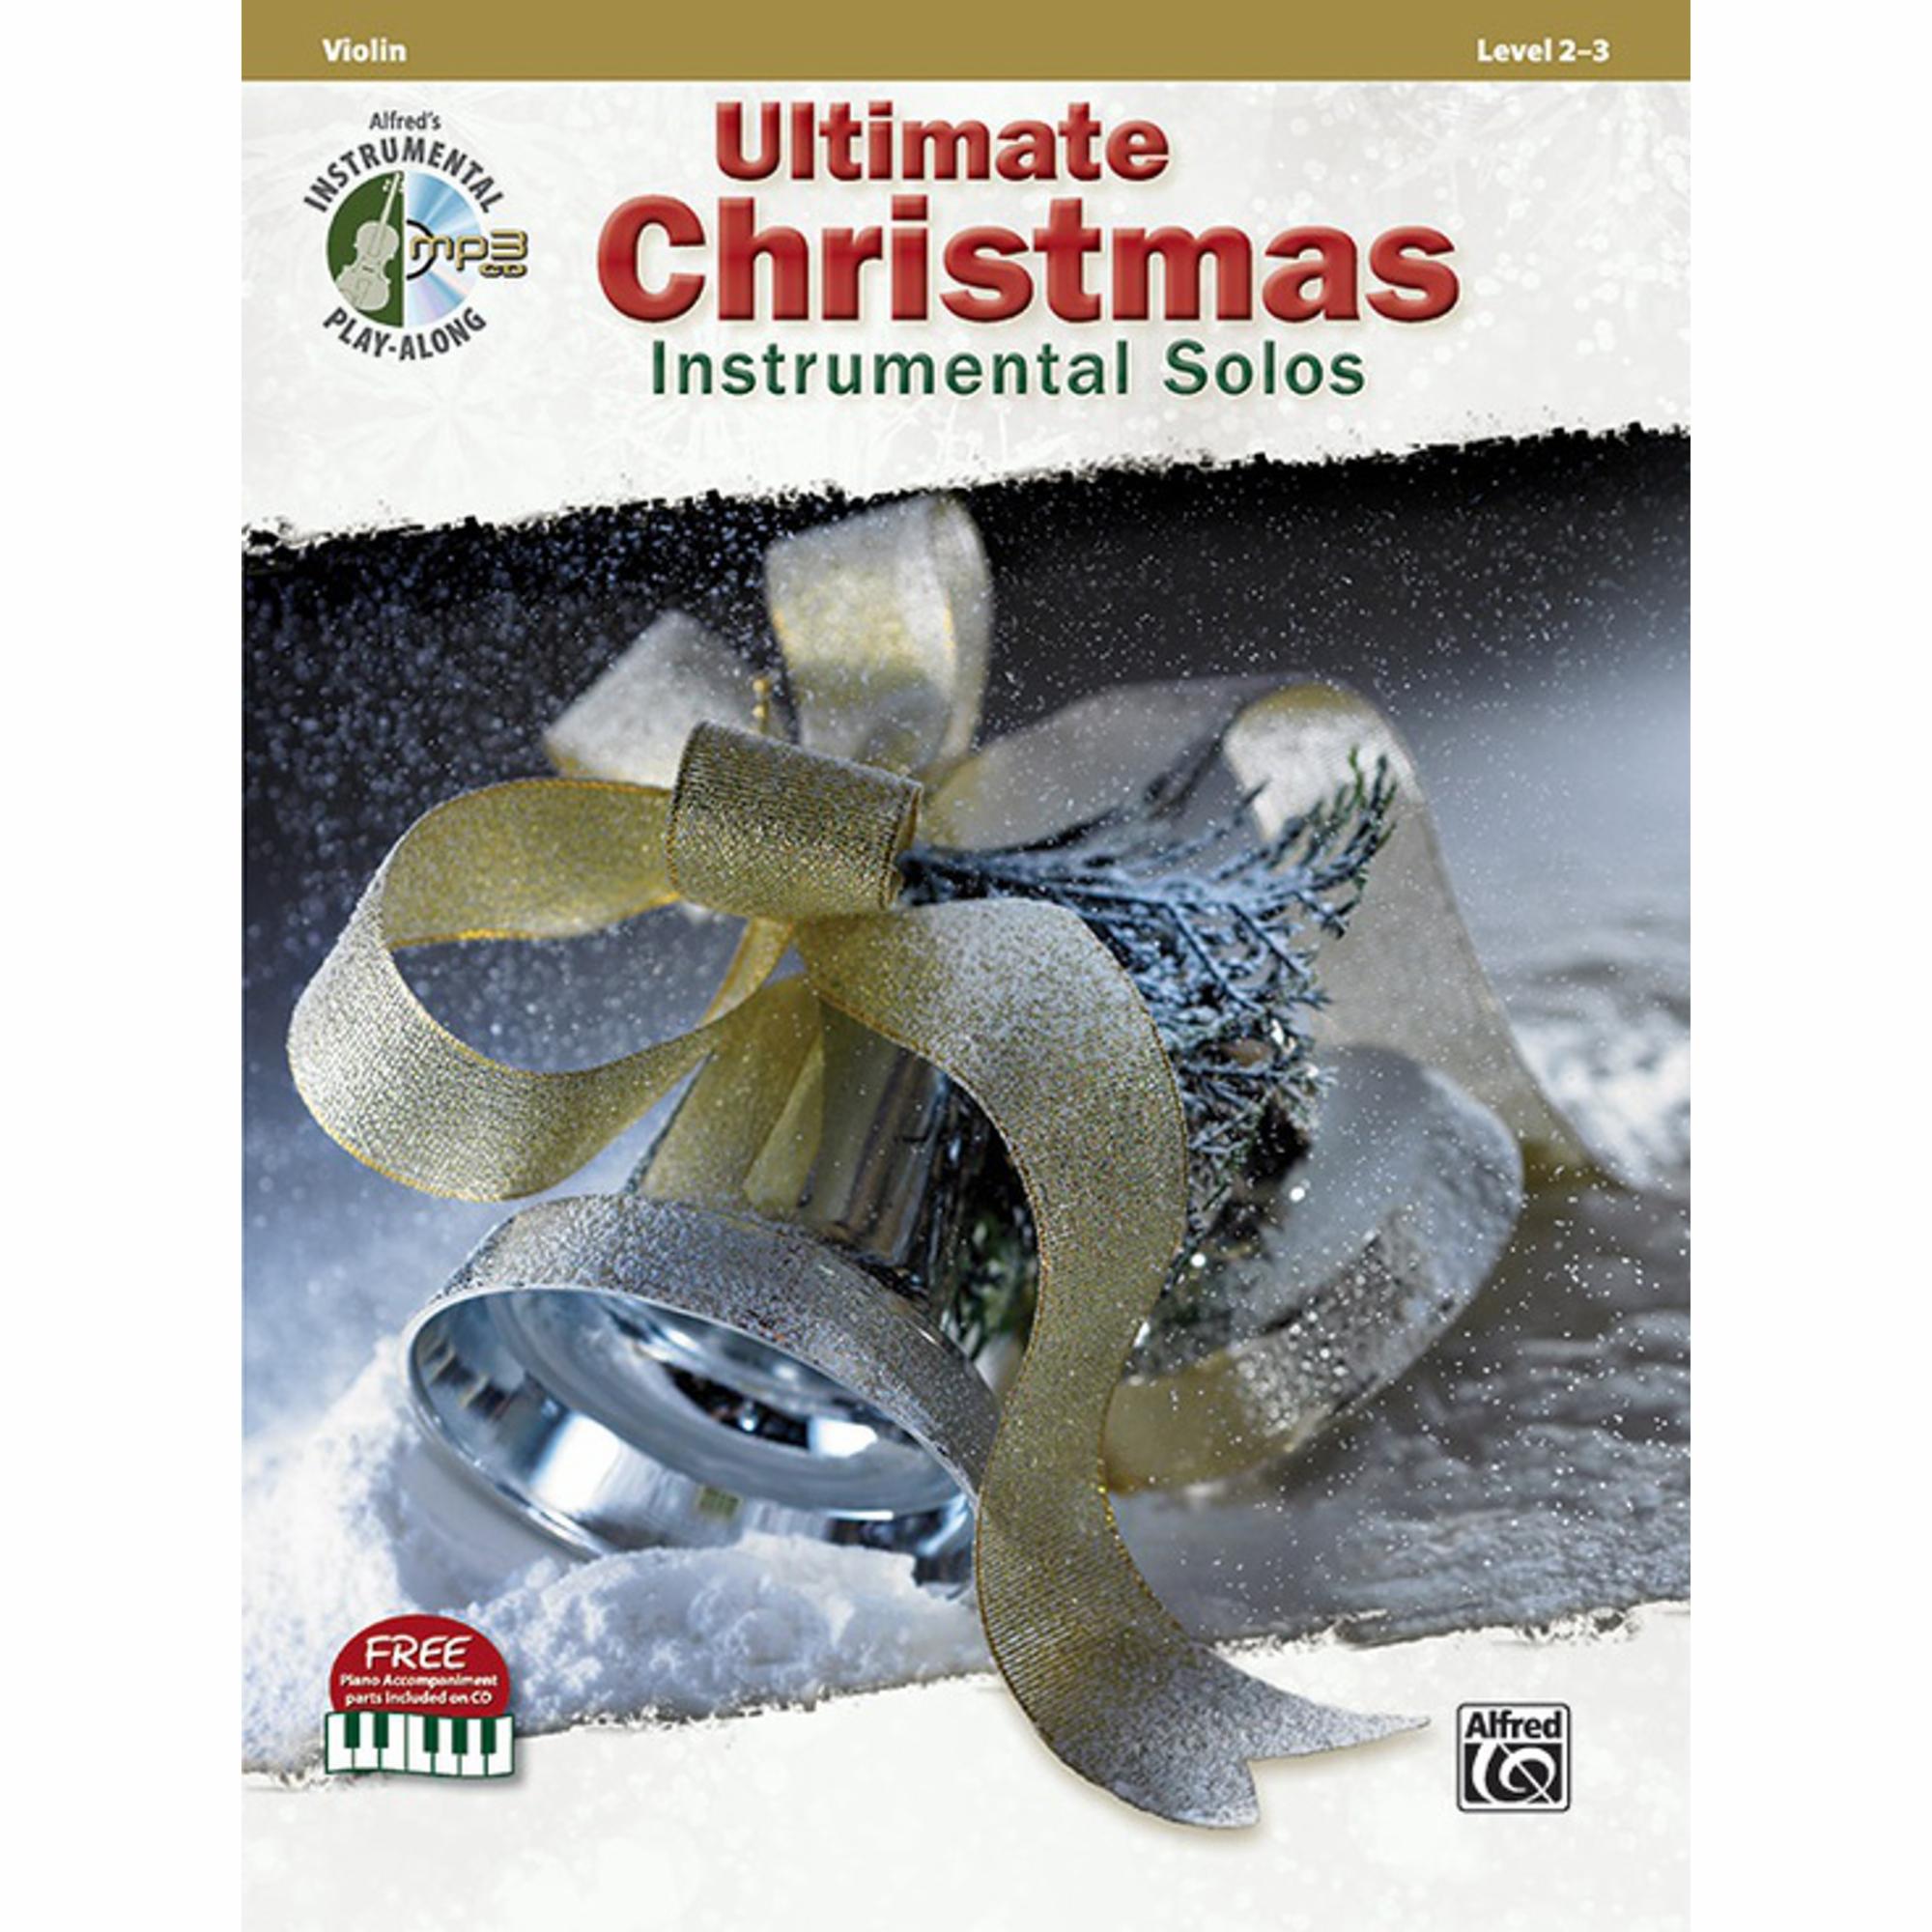 Ultimate Christmas Solos for Violin, Viola, or Cello